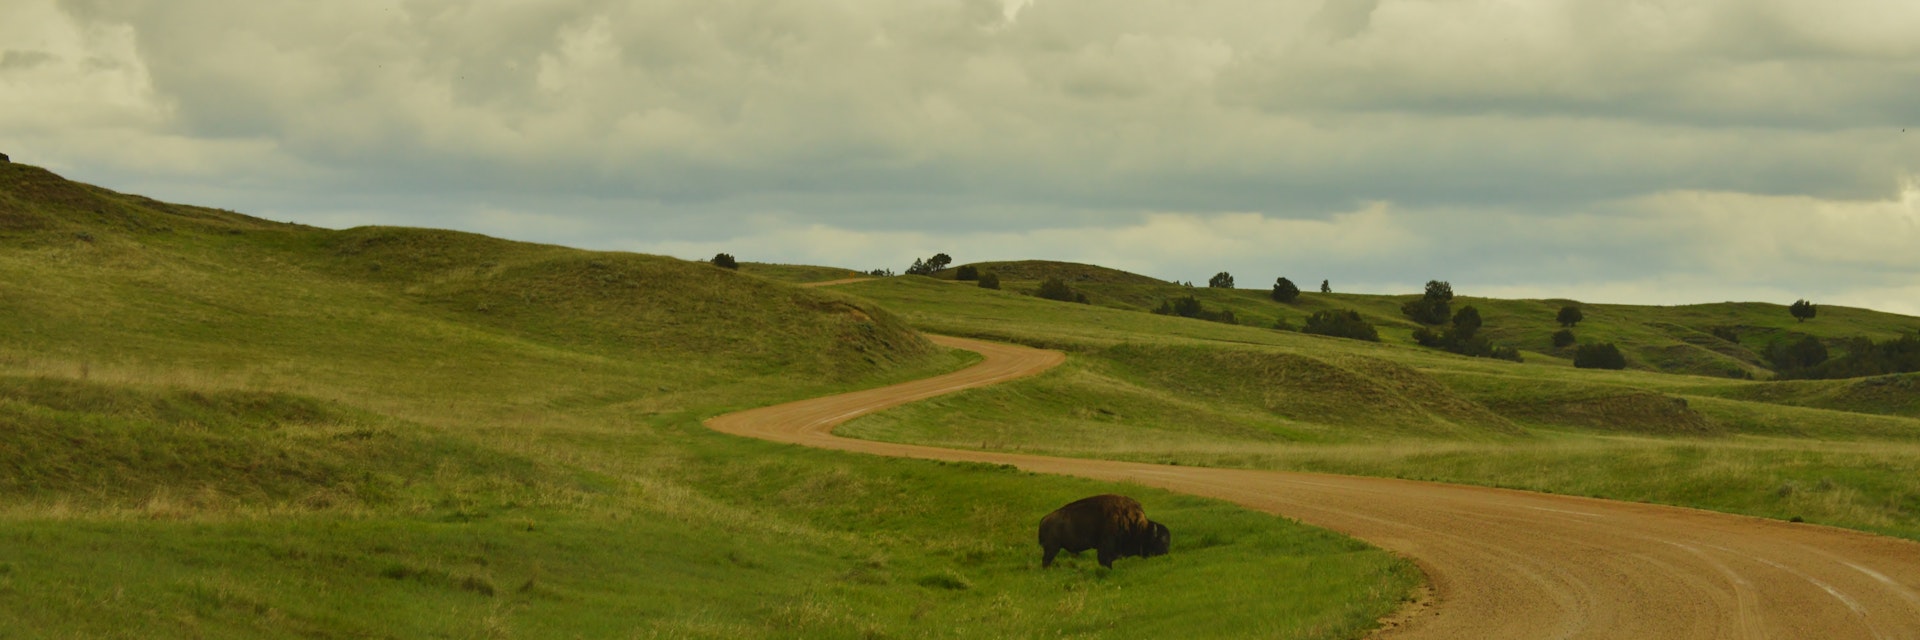 Buffalo grazing on the prairie along the Sage Creek Rim Road, Badlands National Park, Black Hills, South Dakota.